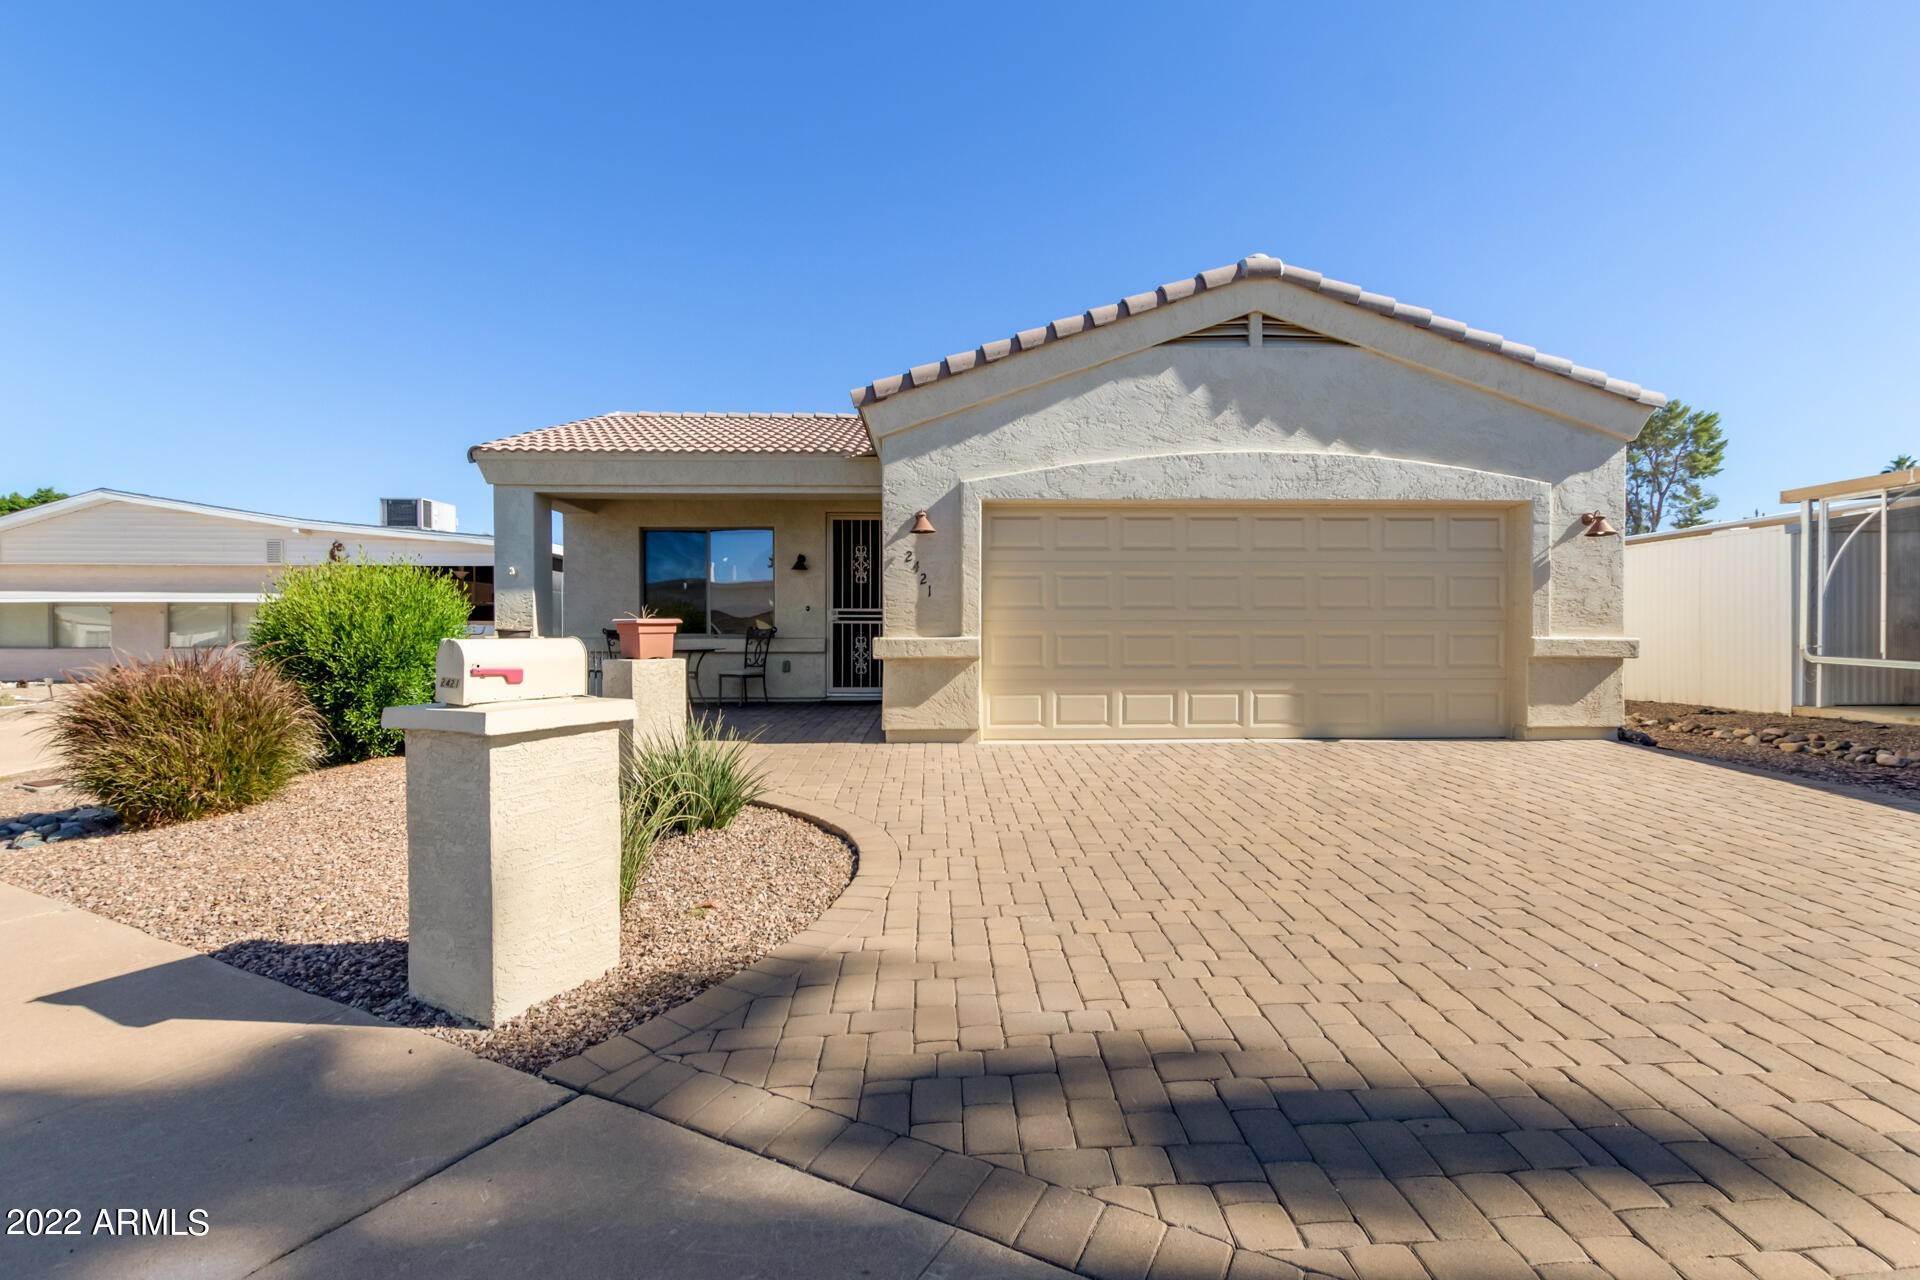 4. Single Family for Sale at Mesa, AZ 85215